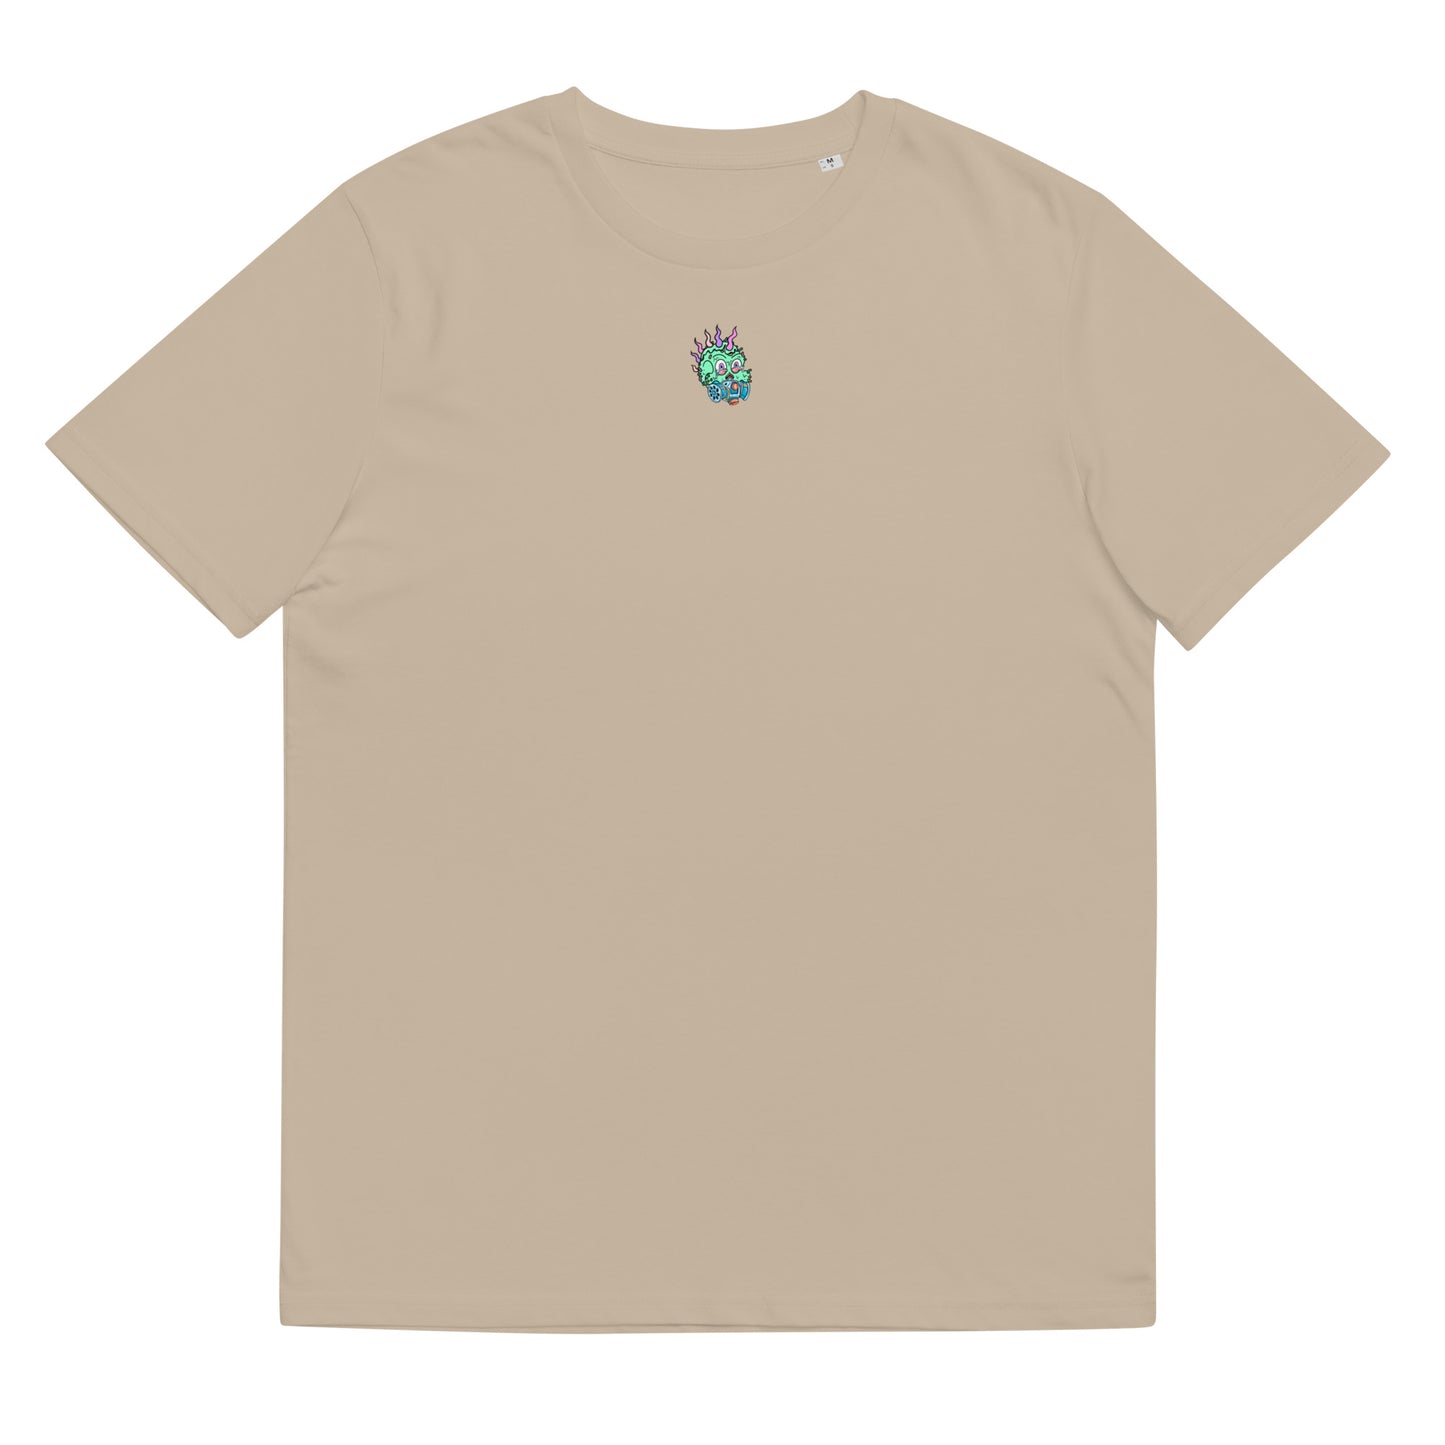 Unisex organic cotton t-shirt REAR PRINT + FRONT LOGO feat Toxic Skulls Club #7803